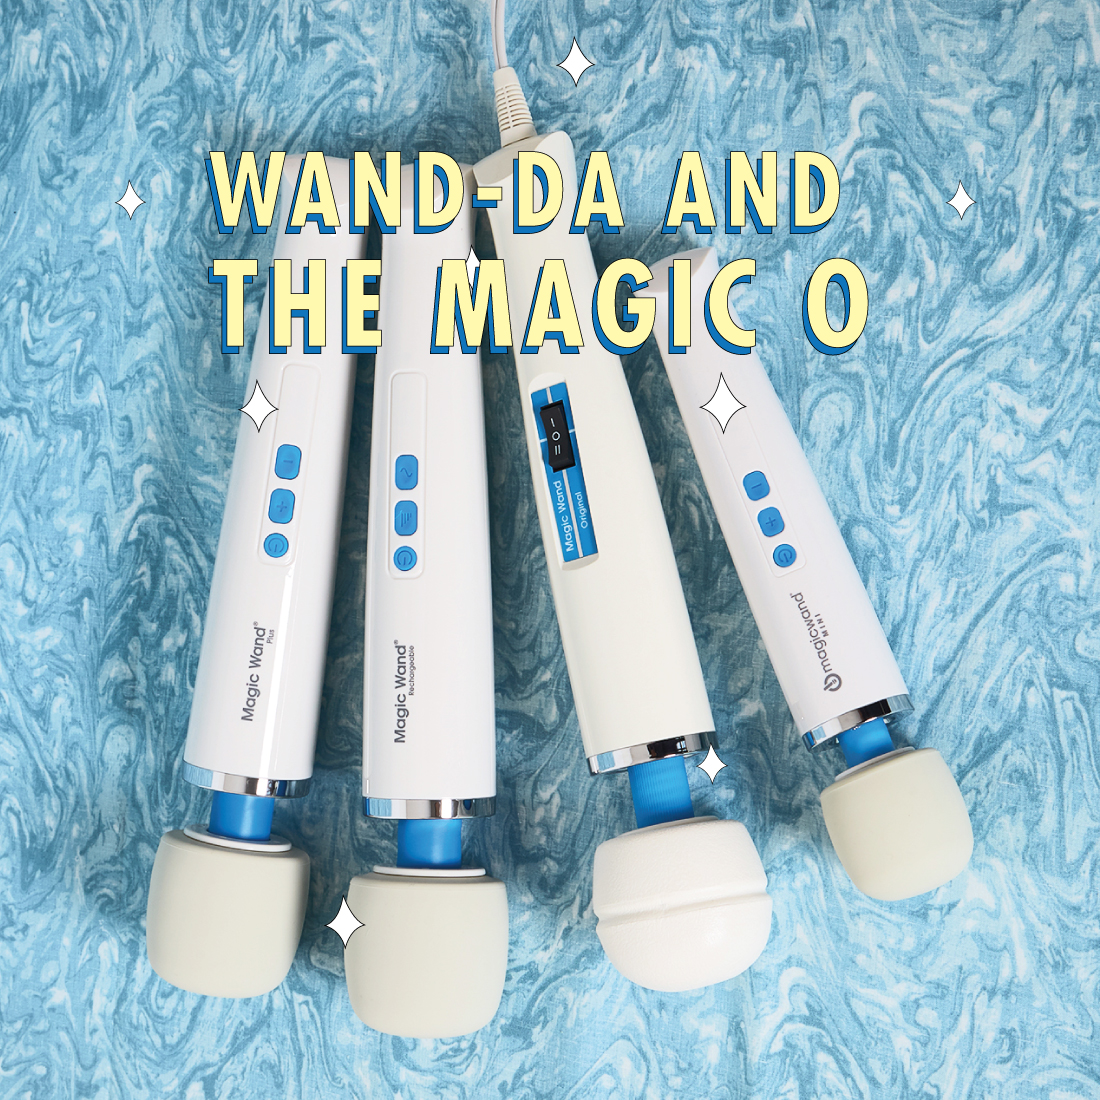 Wand-da and the Magic O